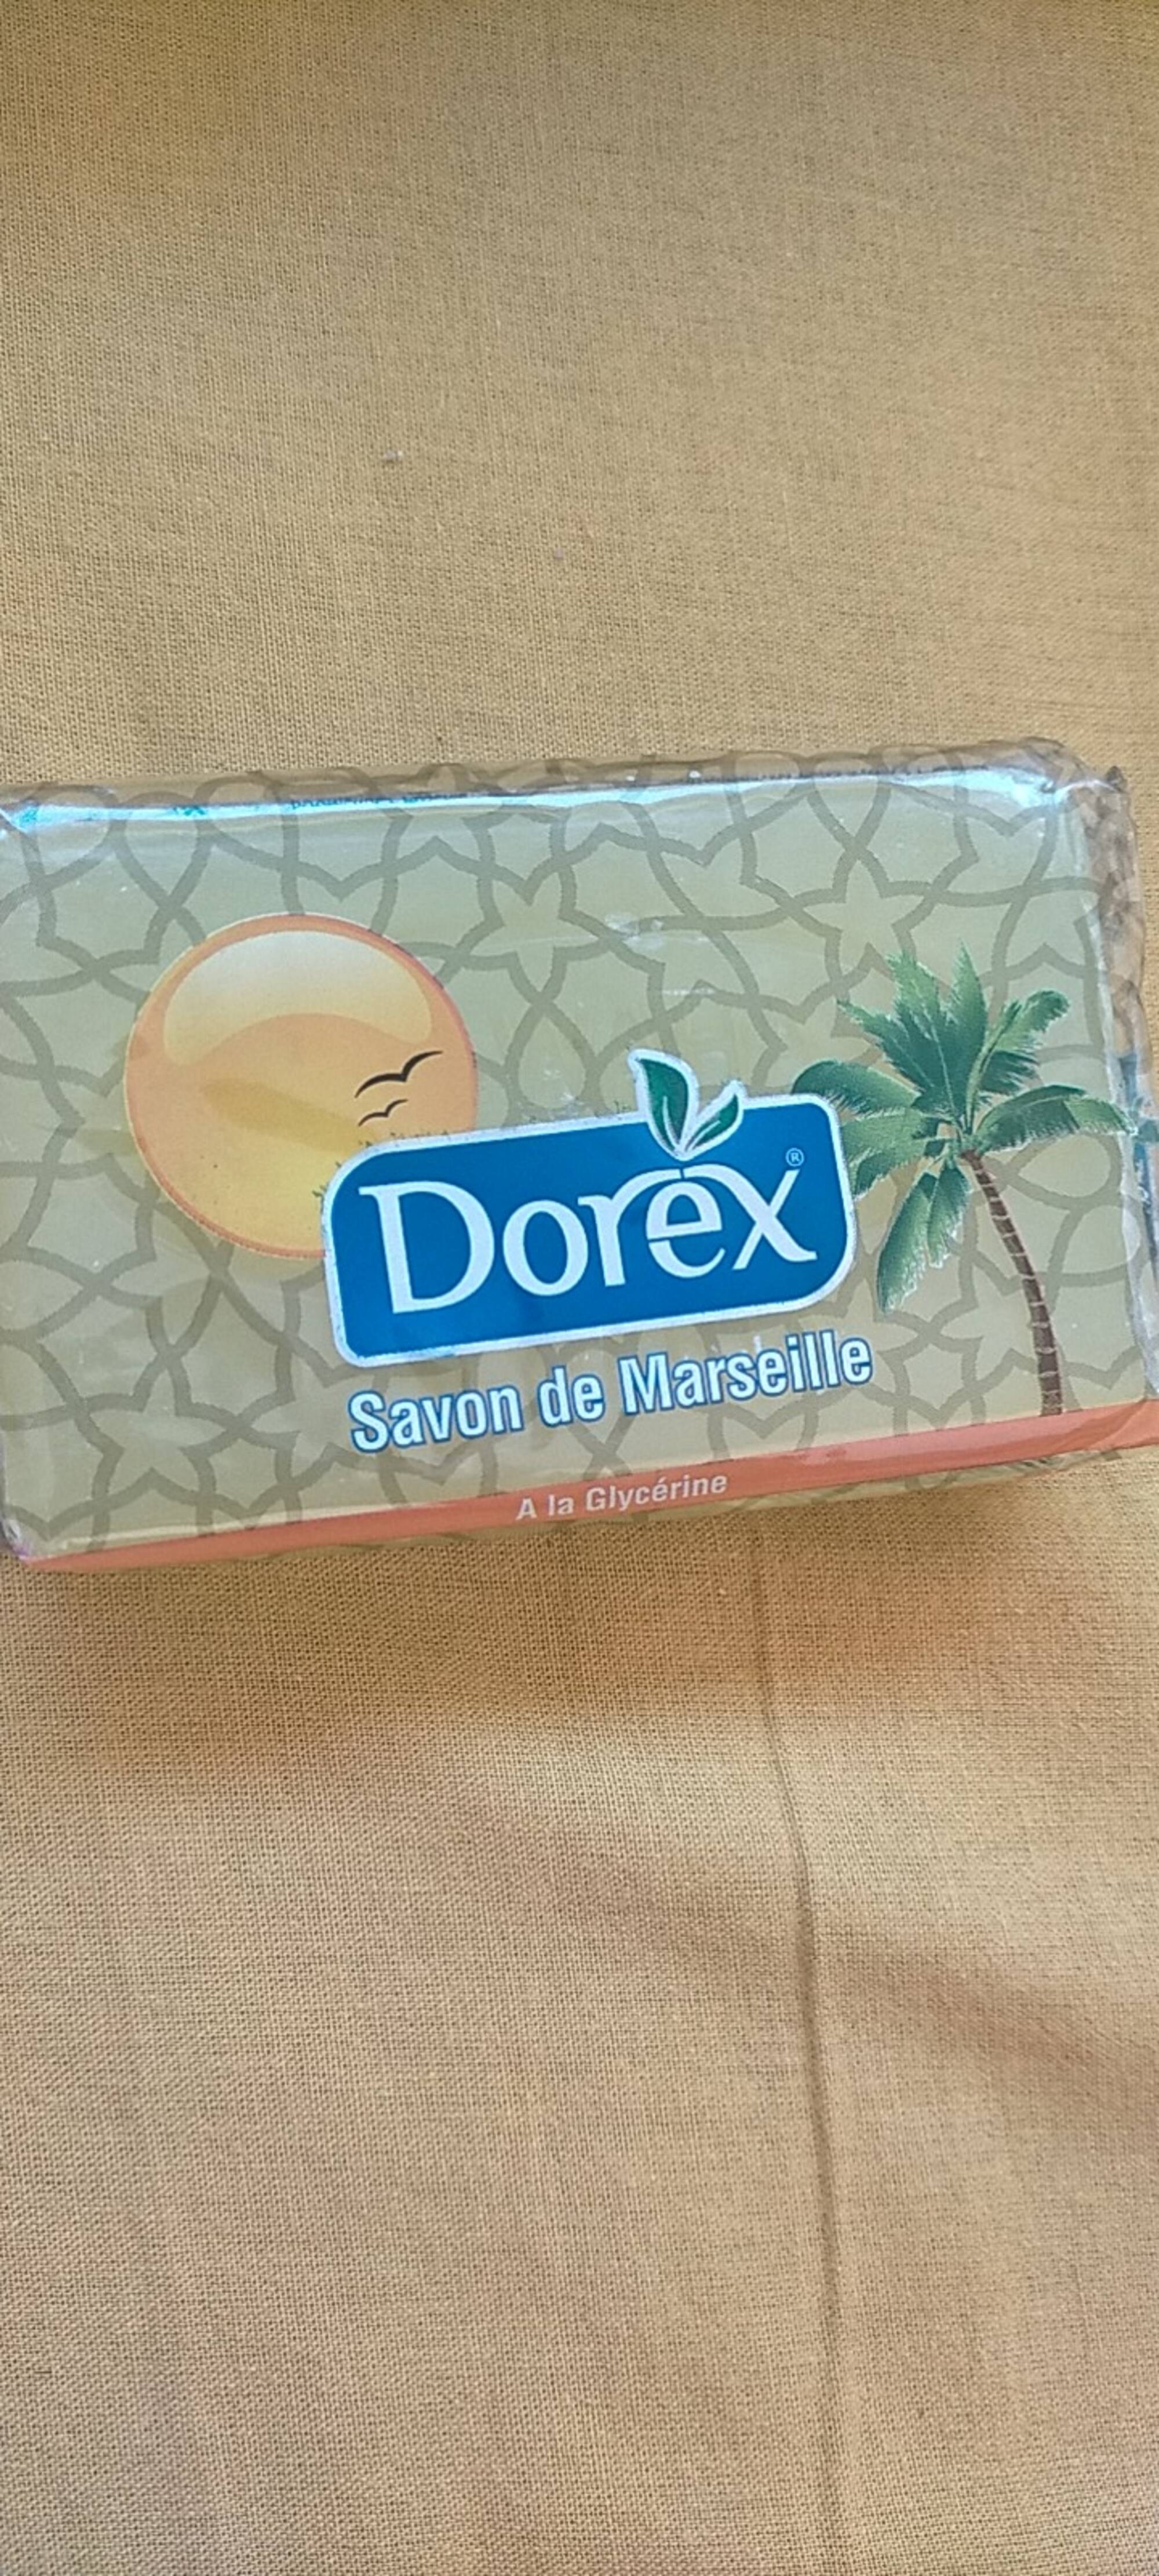 DOREX - Savon de Marseille à la glycérine